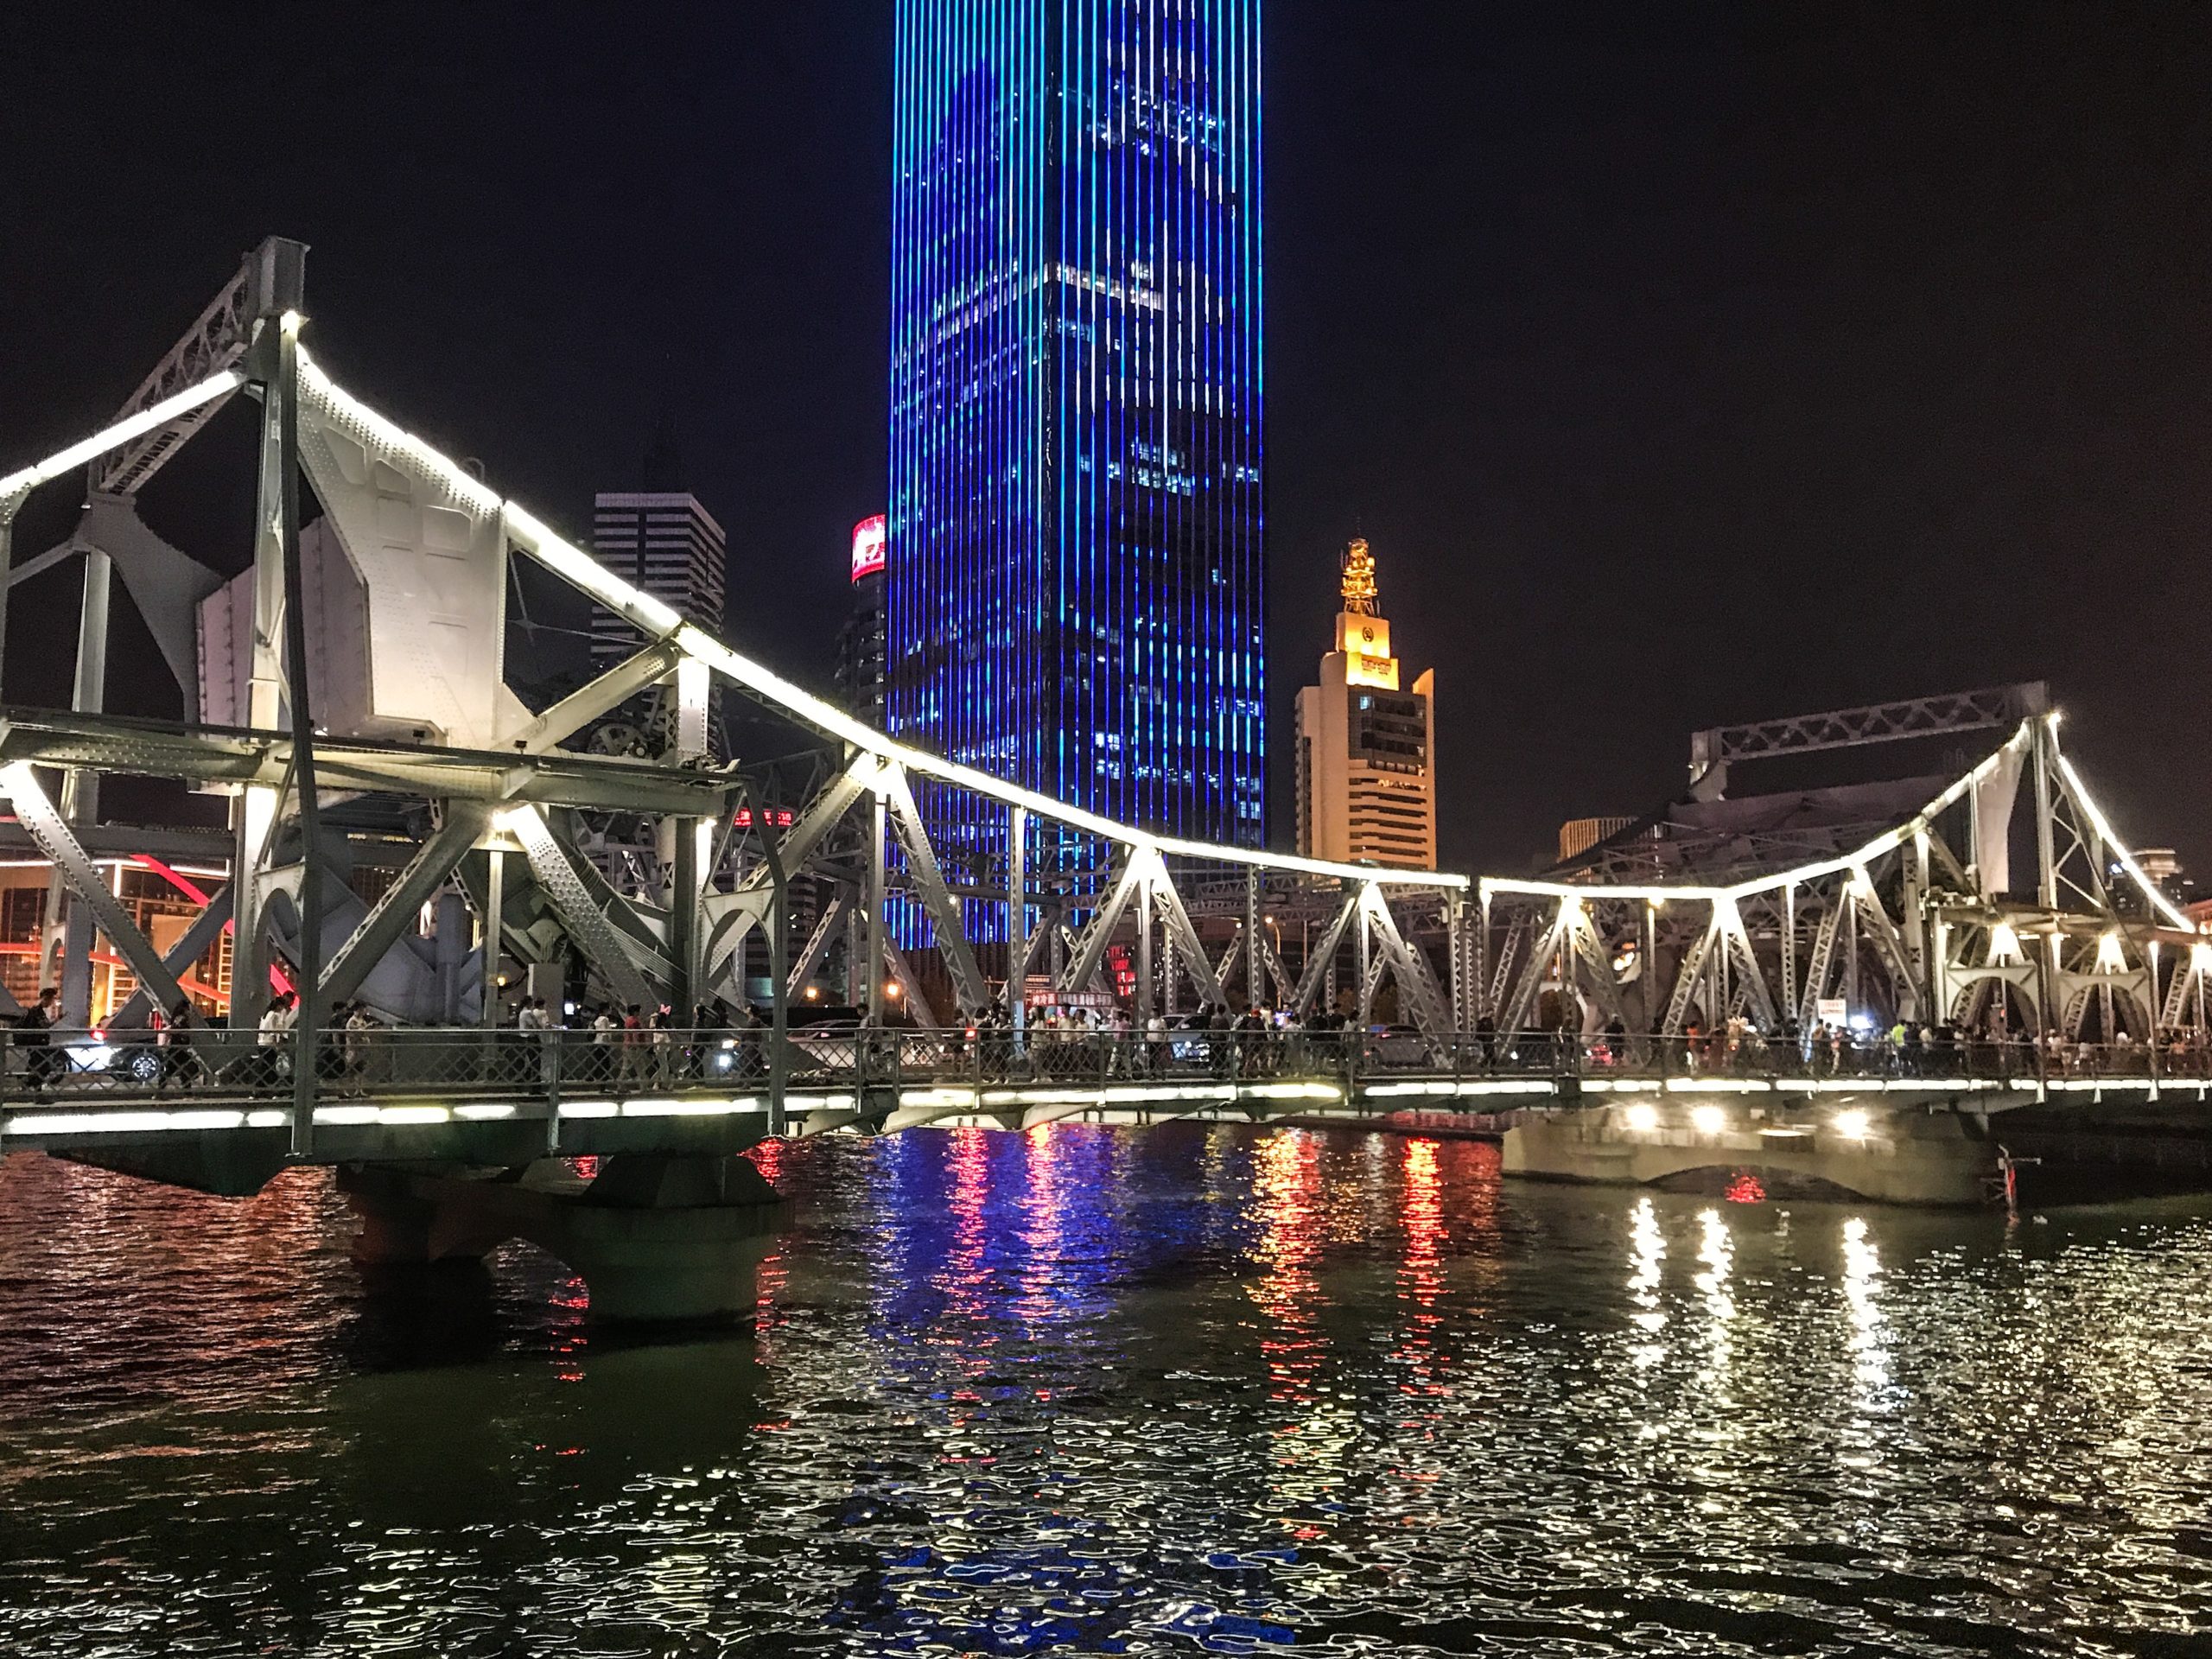 009 Jiefang Bridge 1 October 2019